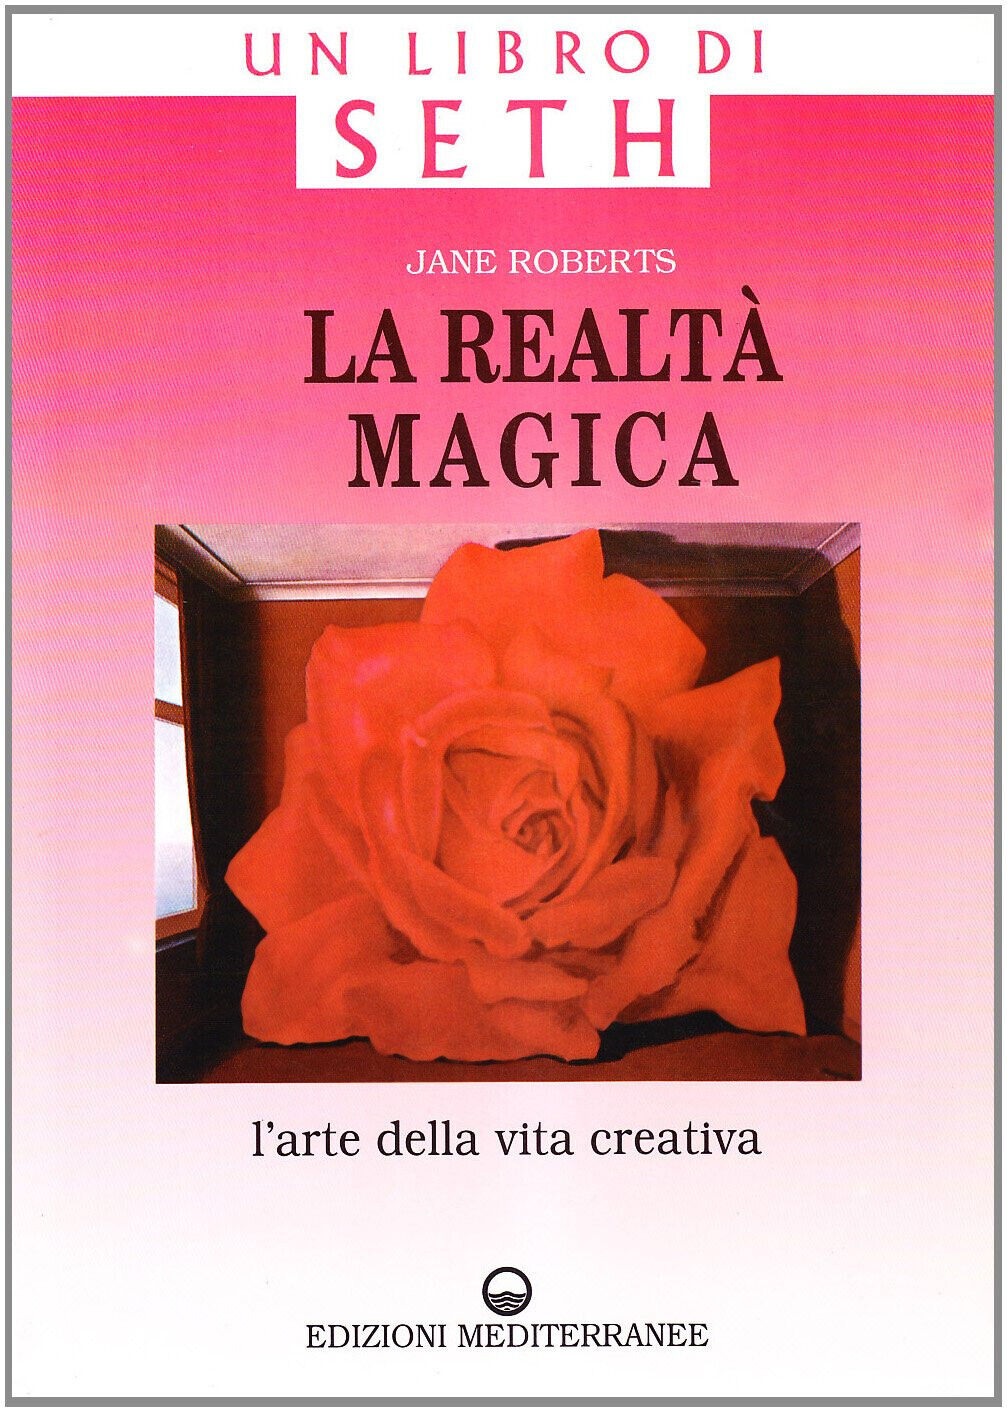 La realt? magica - Jane Roberts - Edizioni Mediterranee, 1997